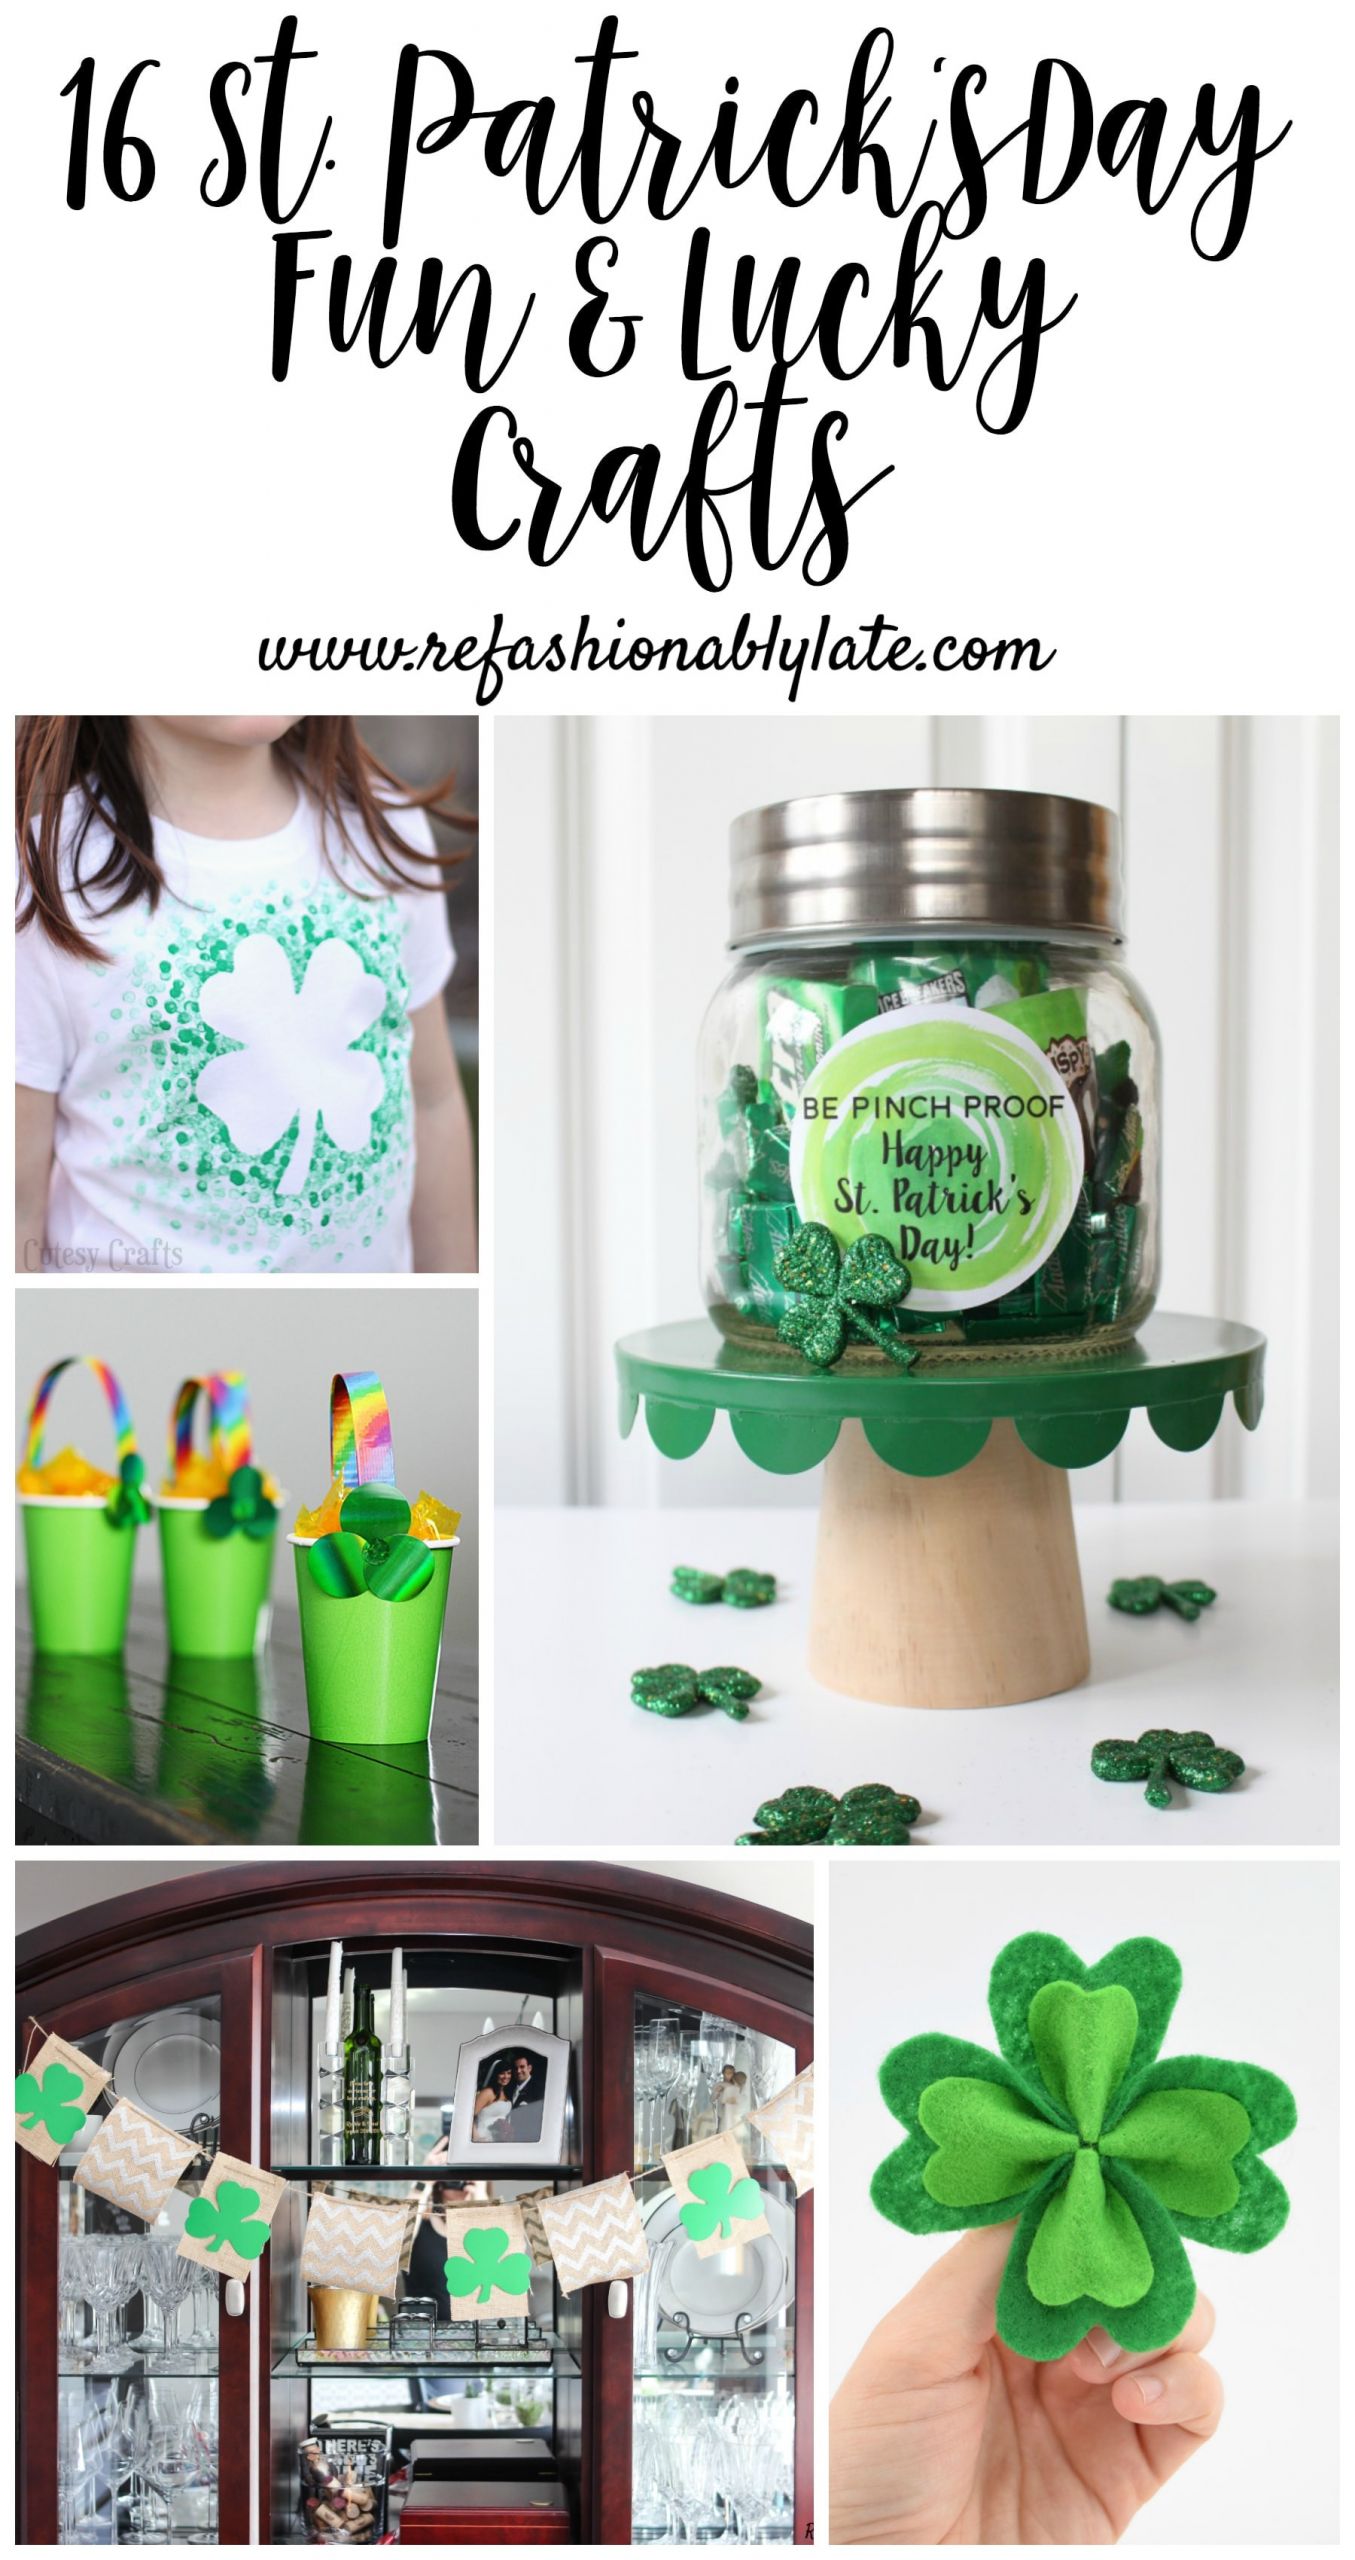 St Patrick's Day Crafts Pinterest
 16 Fun & Lucky St Patrick s Day Crafts • REFASHIONABLY LATE